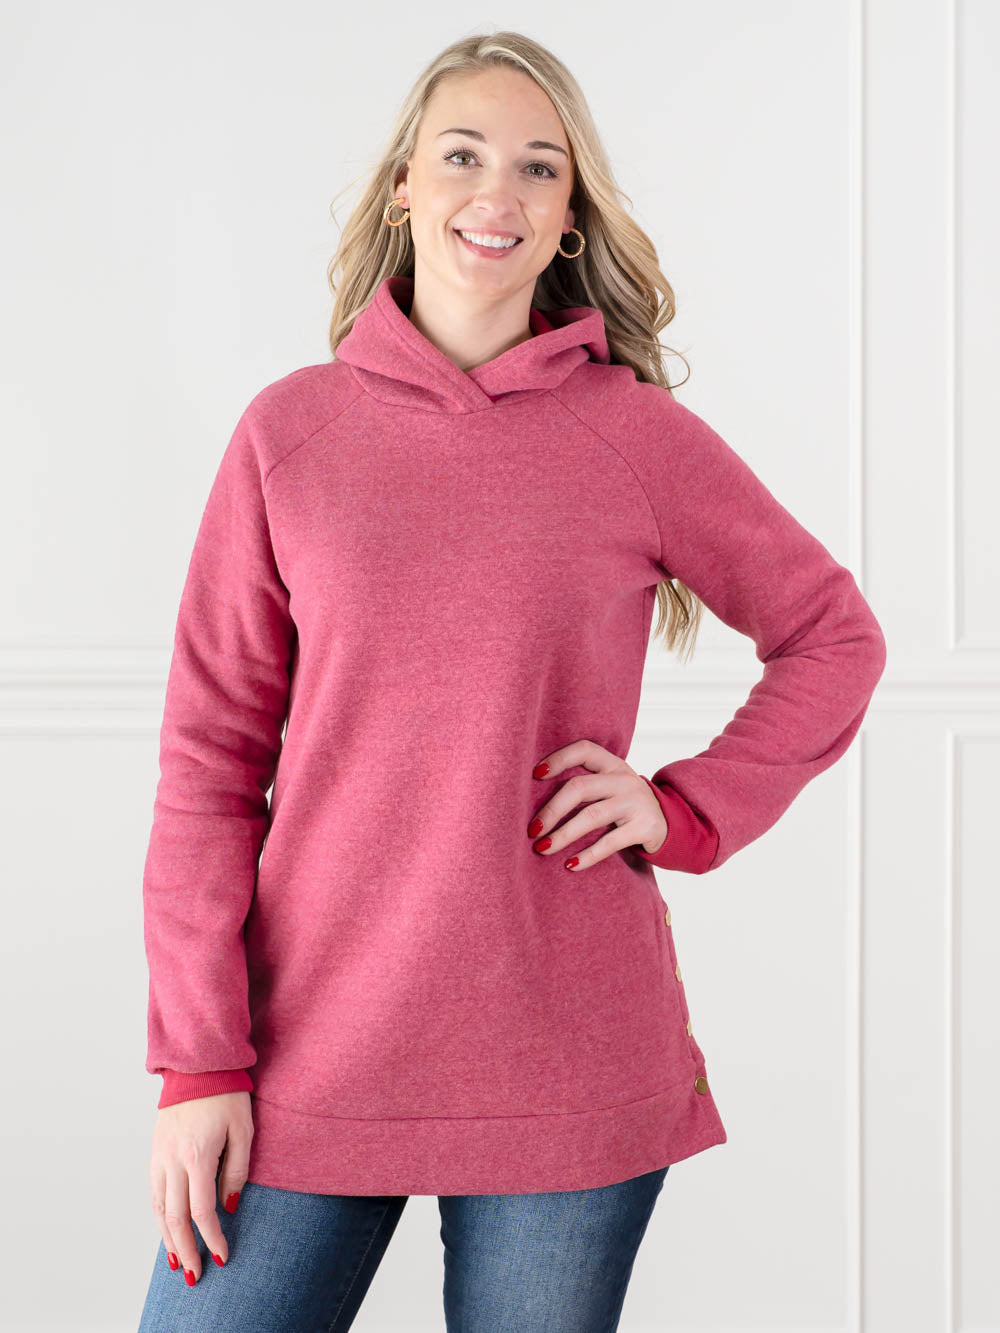 Longer Length Sweatshirts for Women